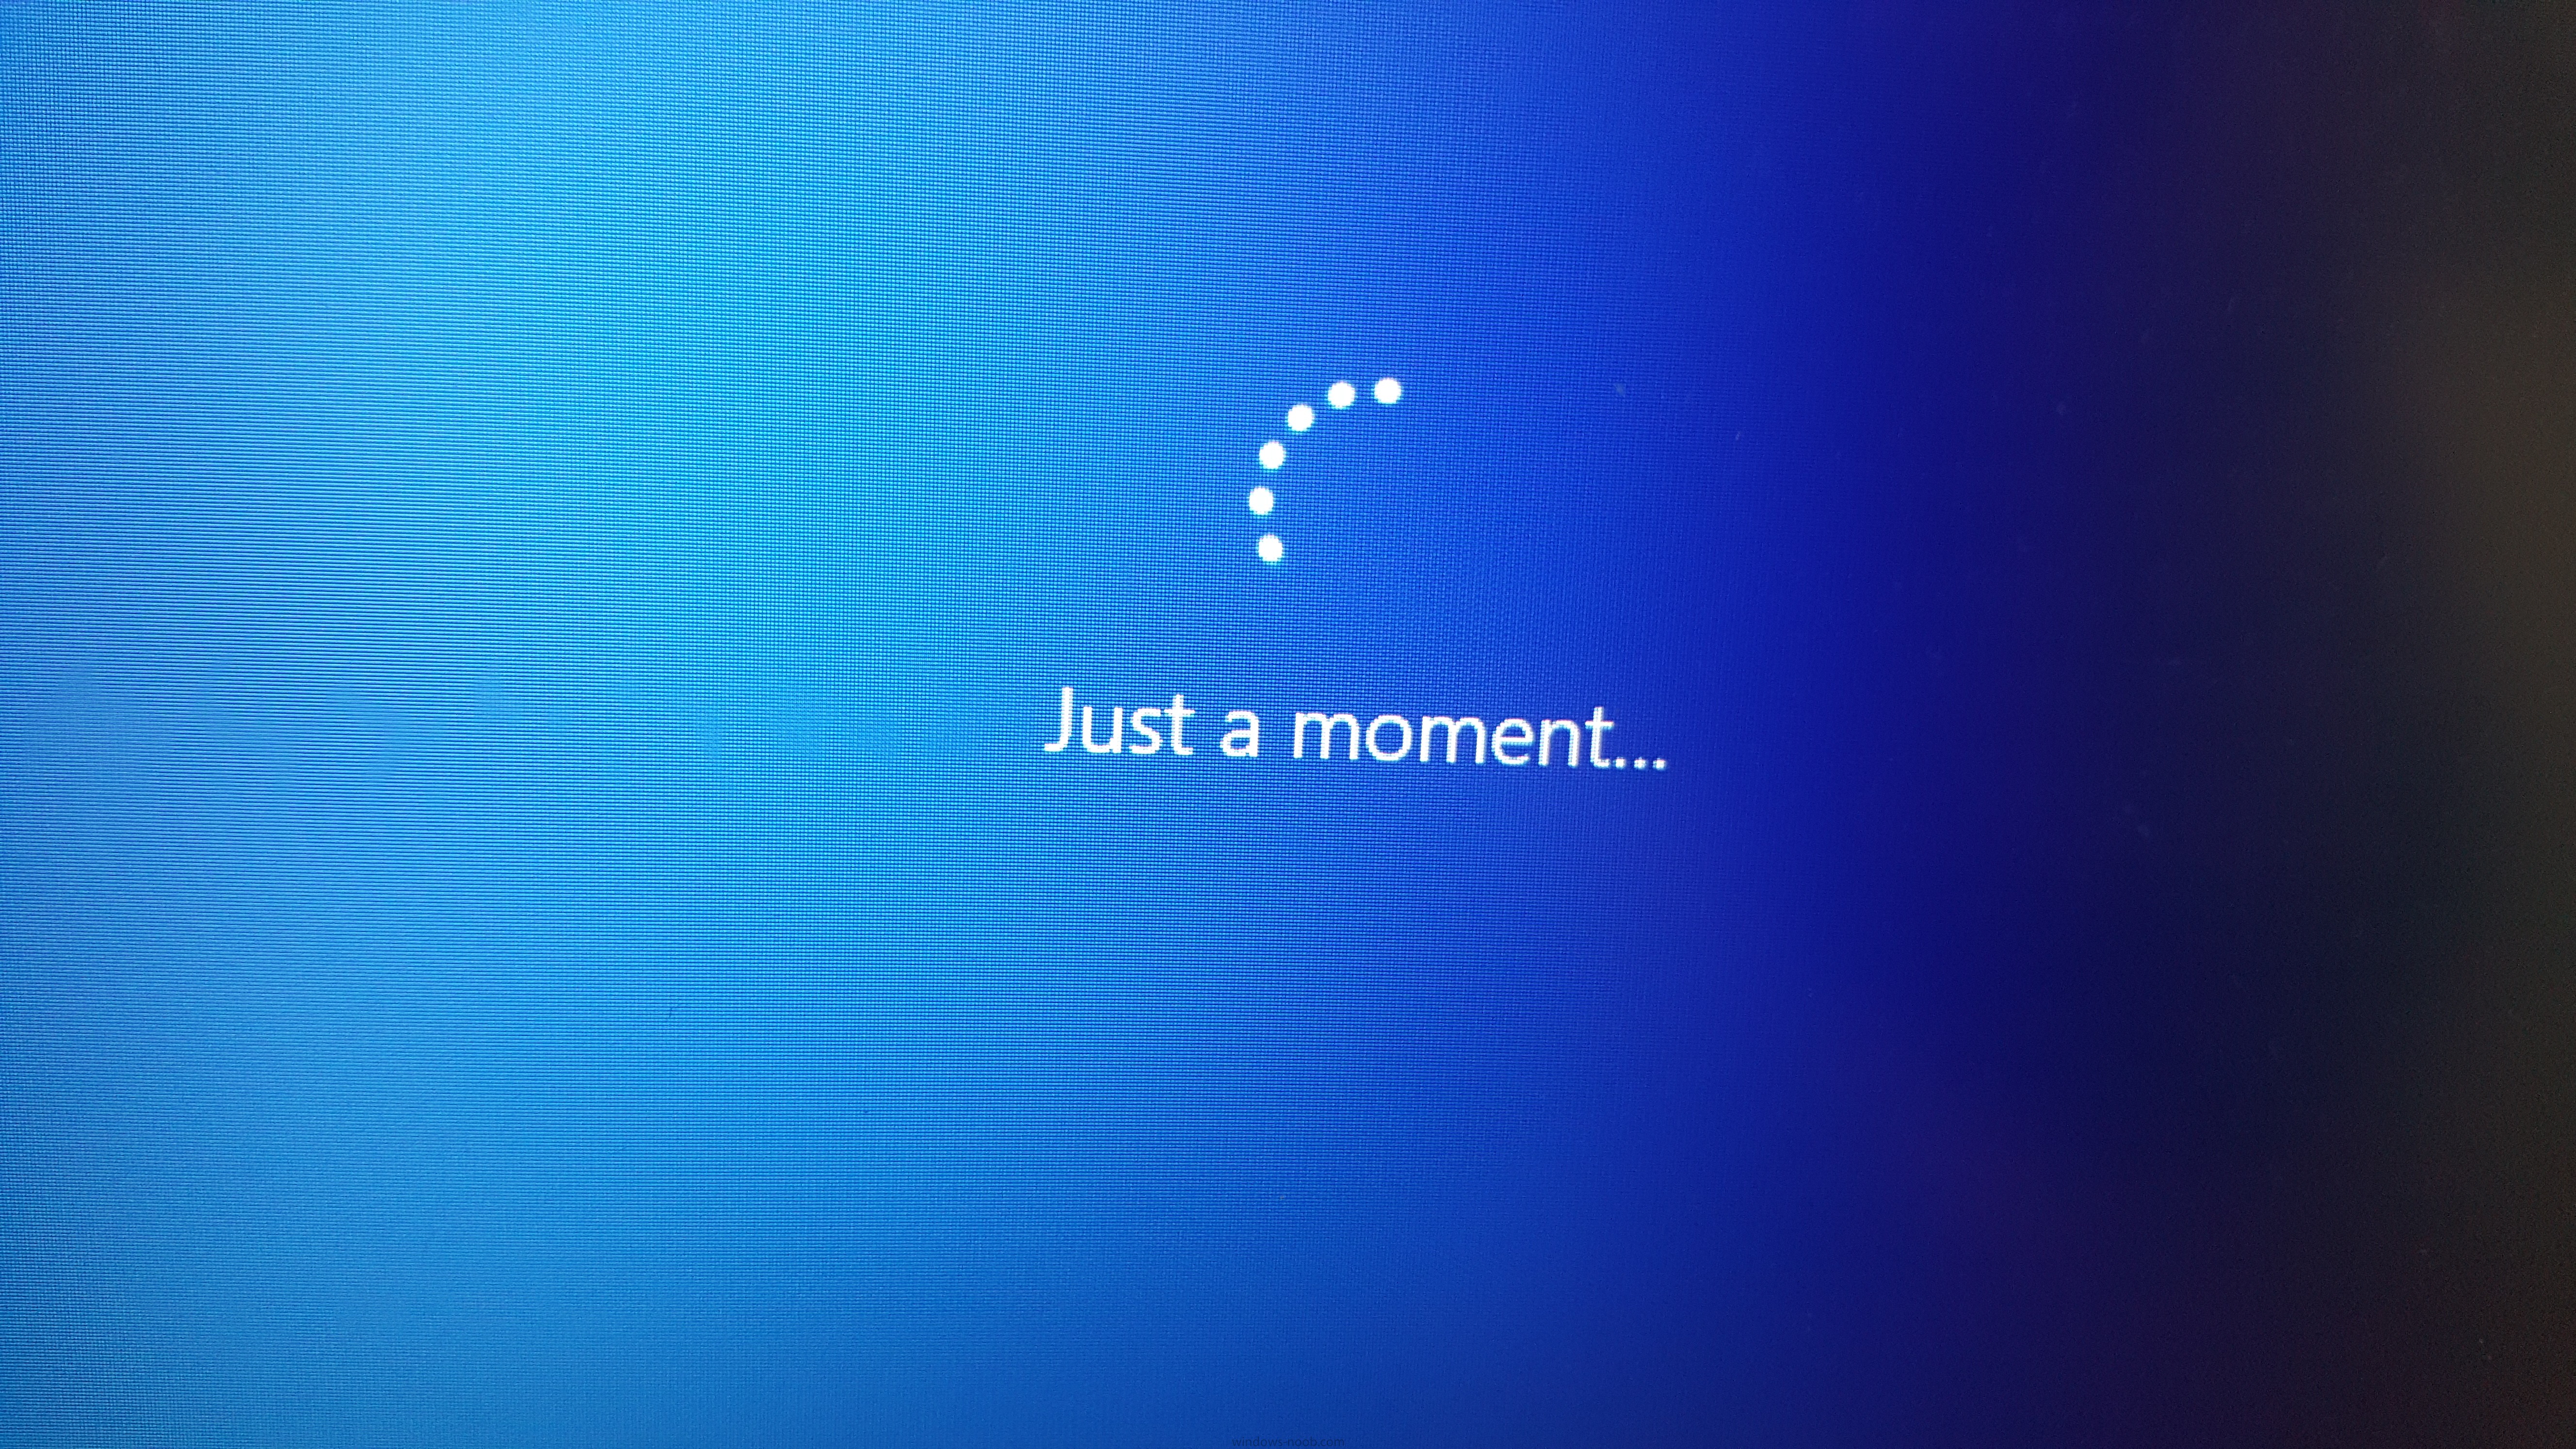 Windows 10 stuck on just a moment sccm